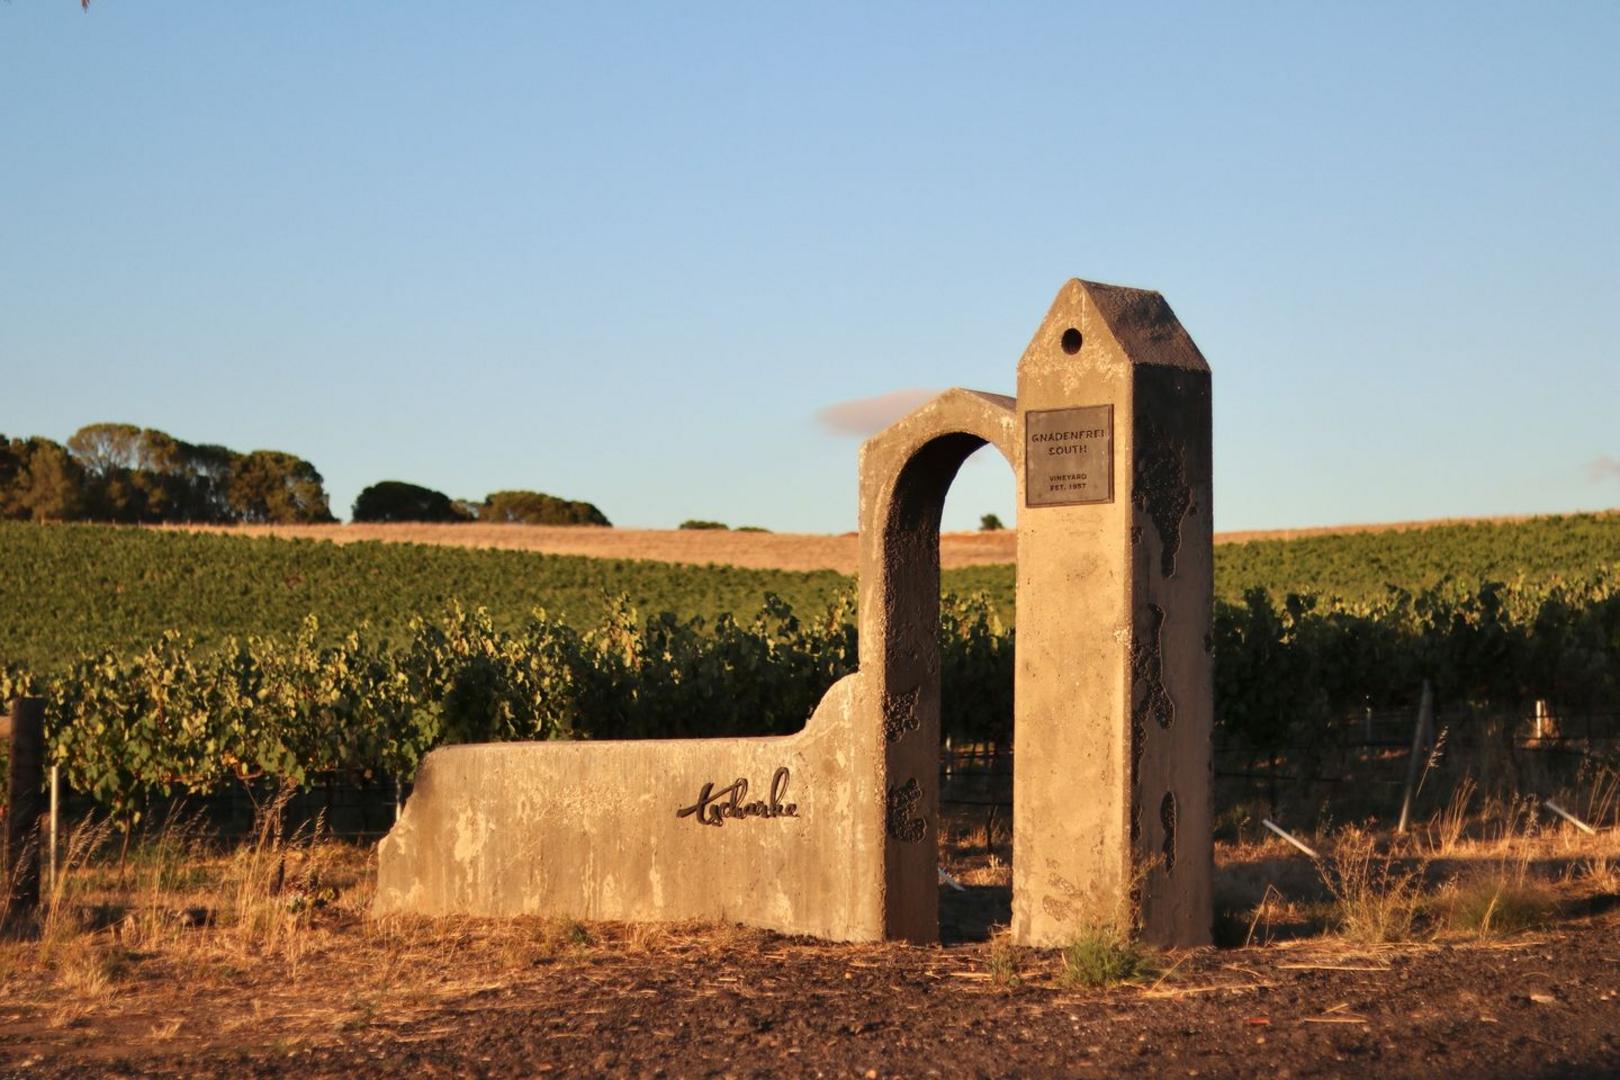 tscharke wines gate gnadenfrei south near vineyards